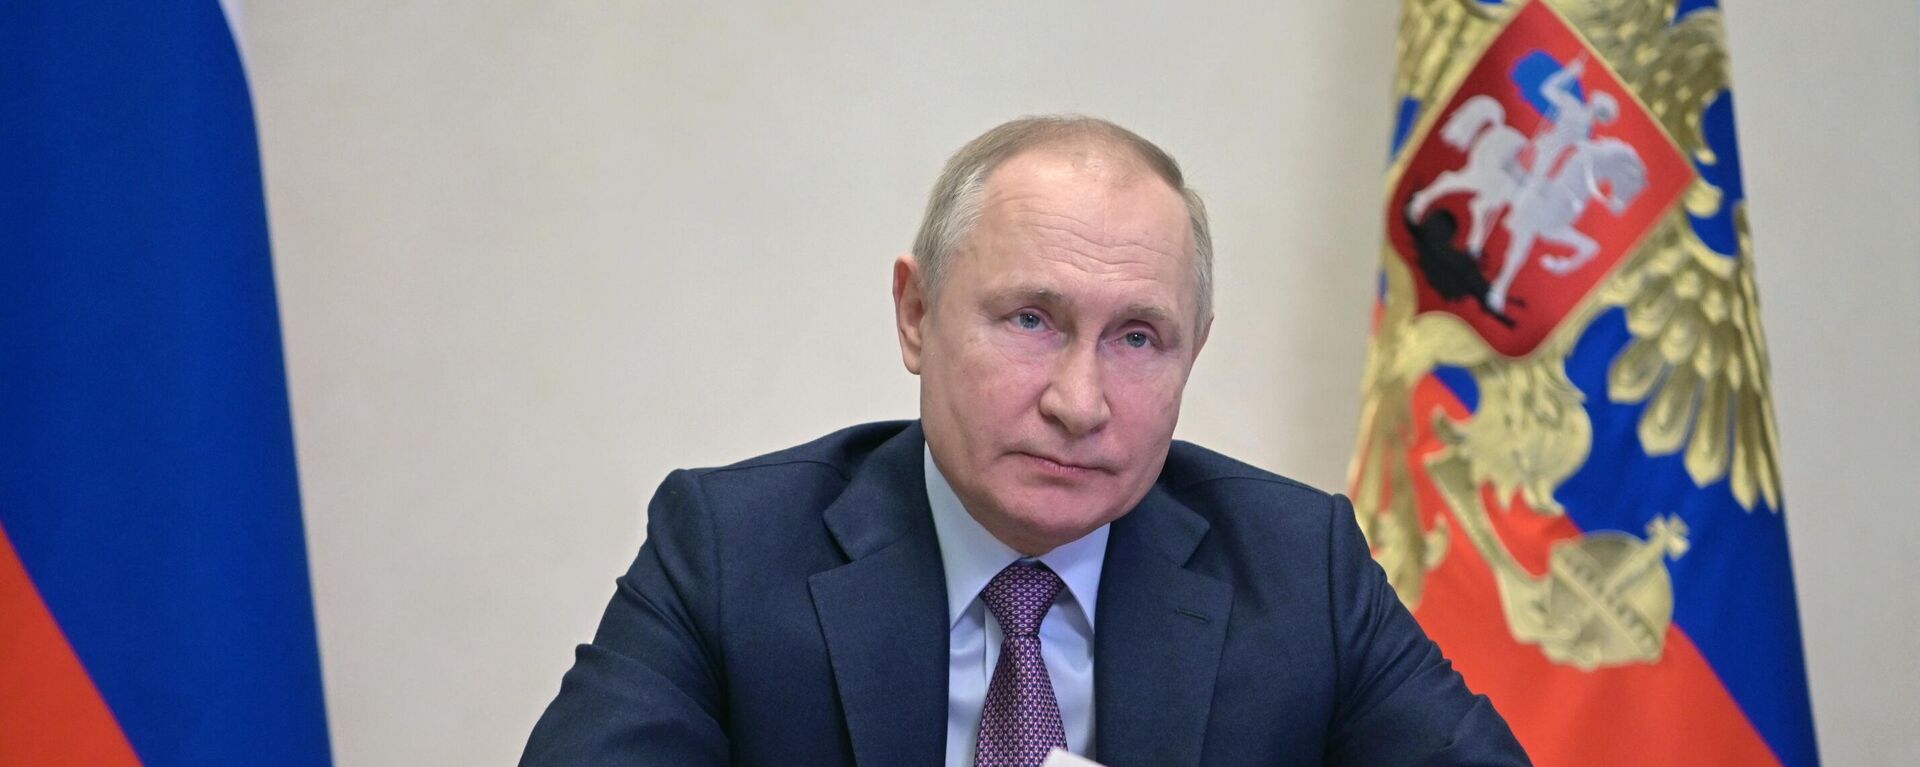 Predsednik Rusije Vladimir Putin - Sputnik Srbija, 1920, 24.12.2021